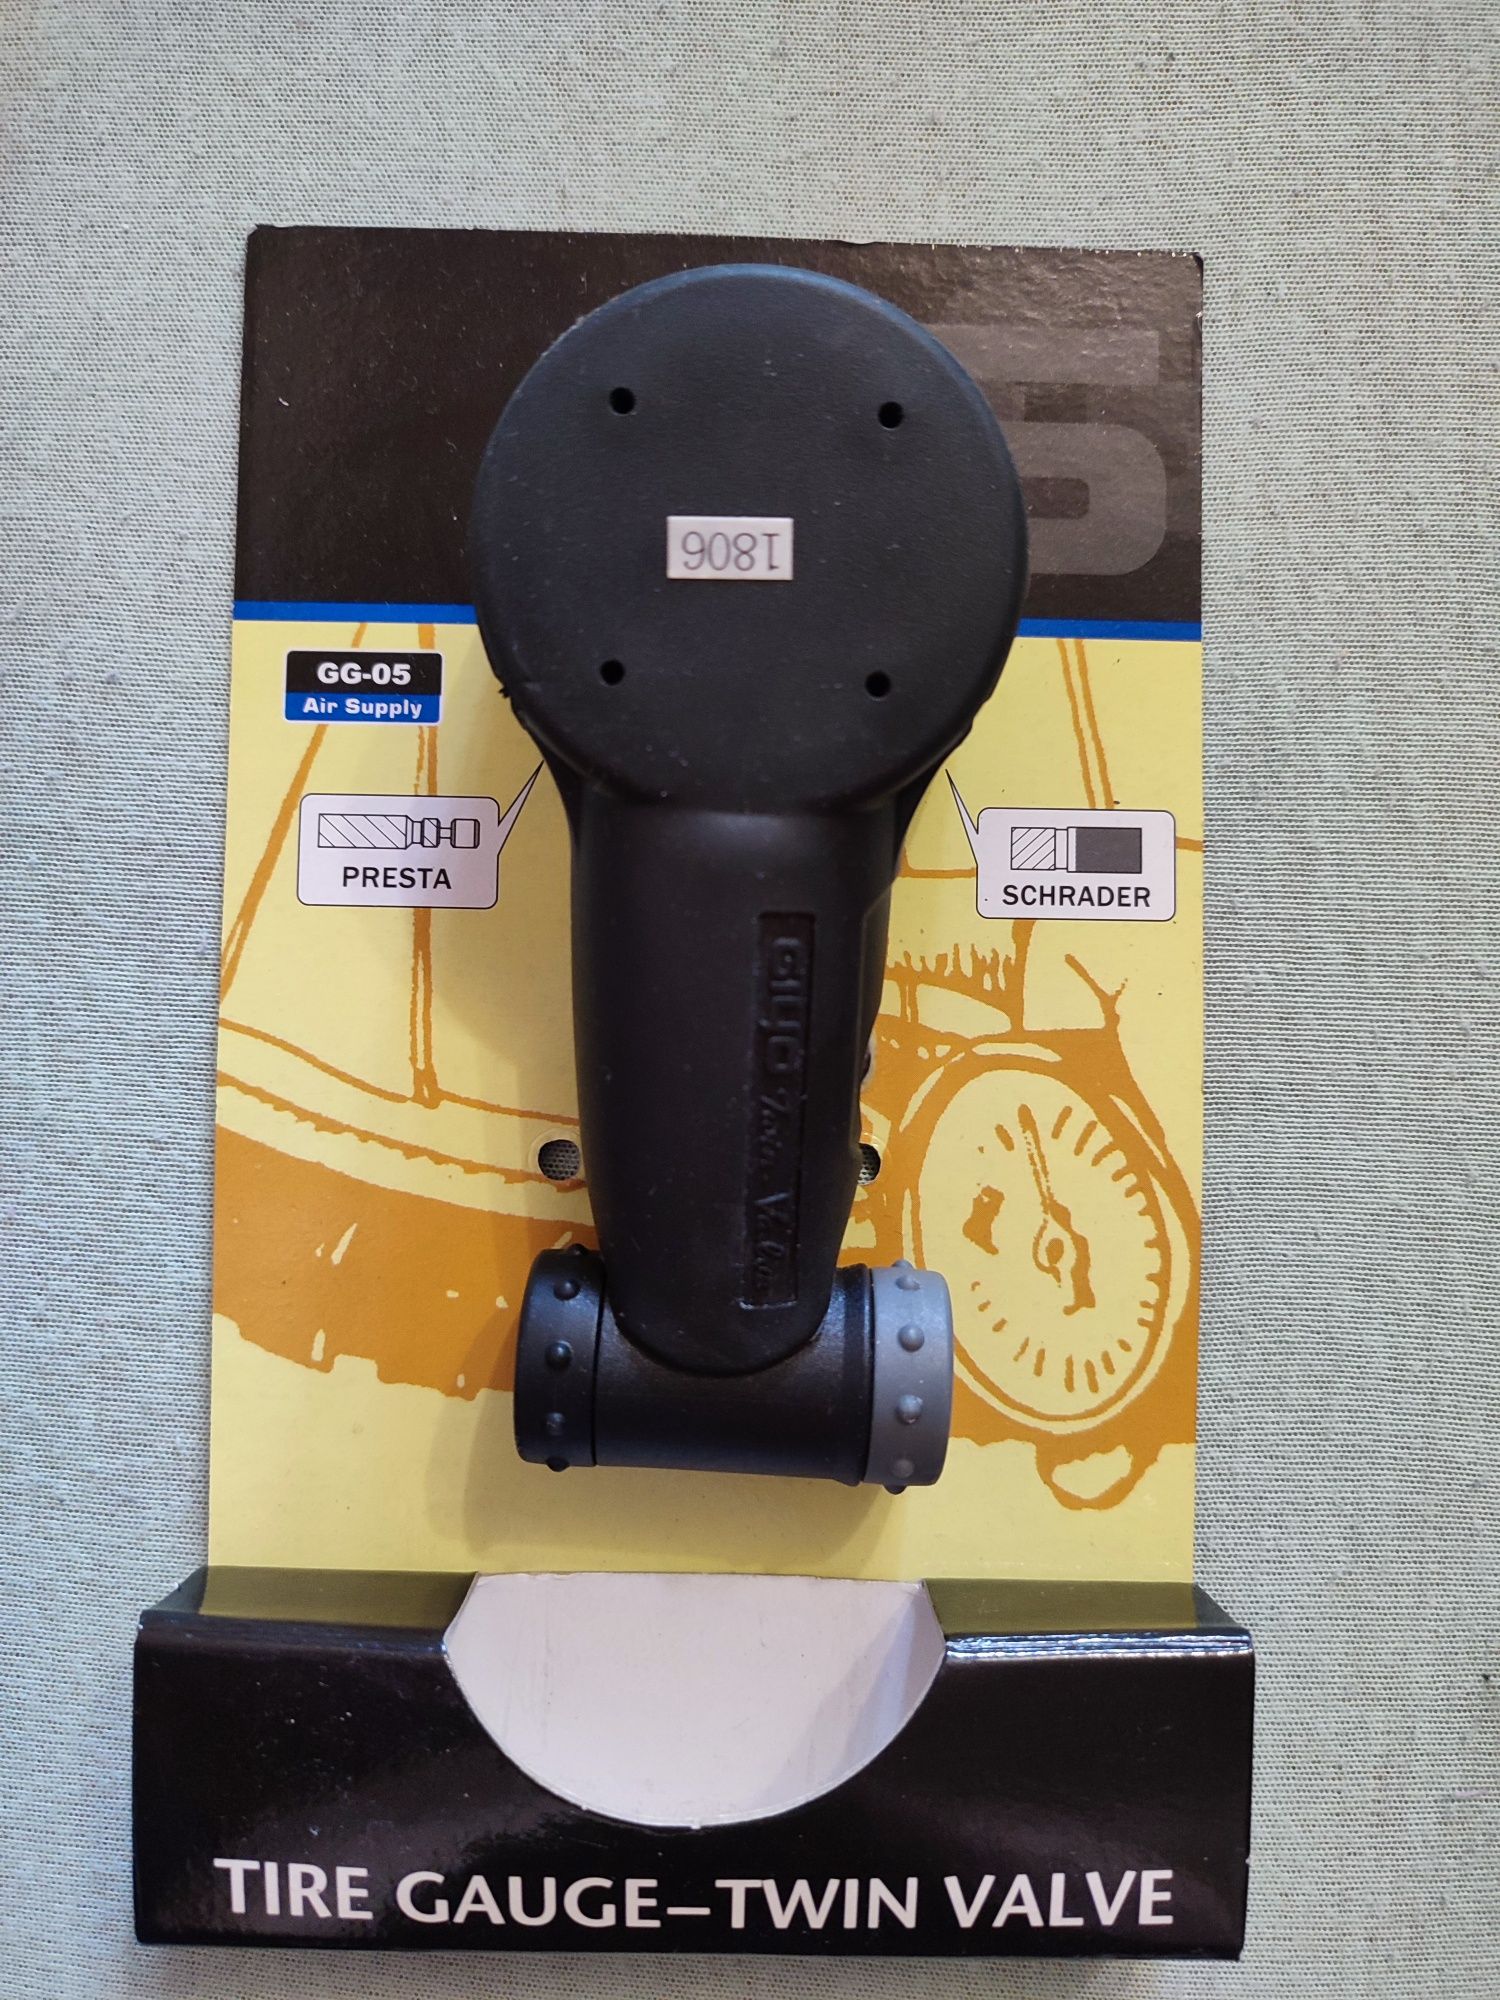 Манометр Giyo GG-05 Air suplay датчик давления воздуха для велошин мтб